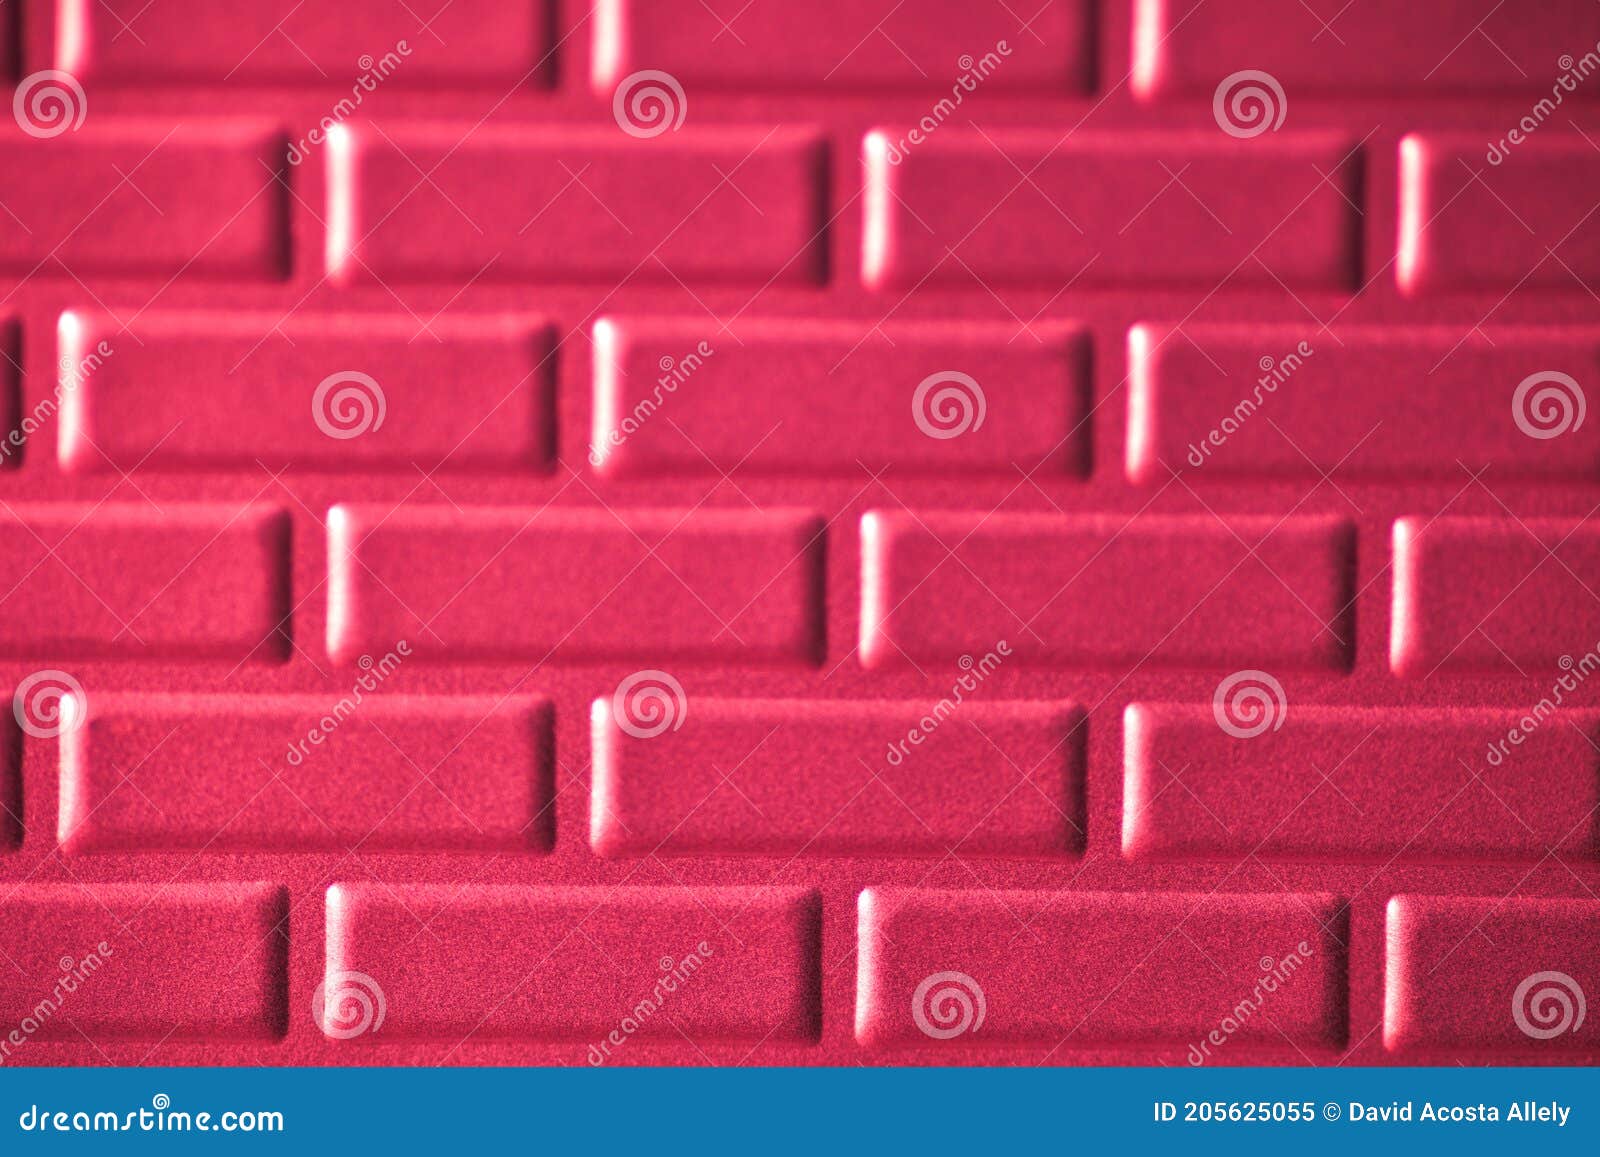 wall of metallic bricks